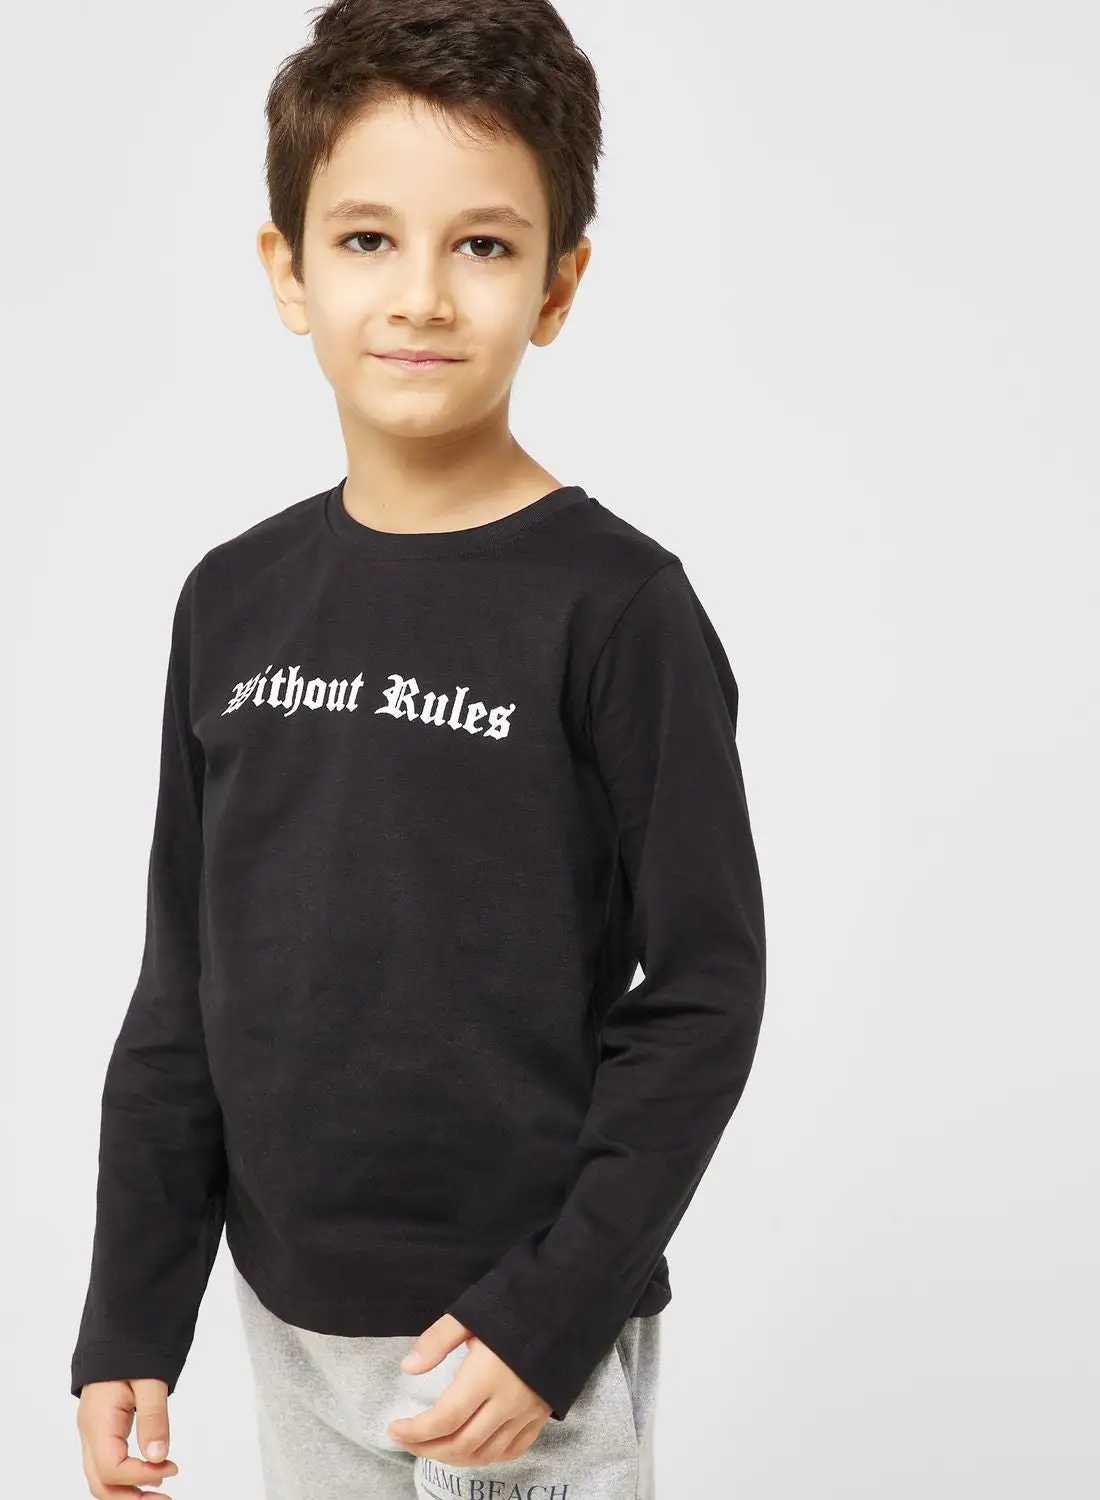 Pinata Front & Back Printed Full Sleeves T-Shirt For Boys